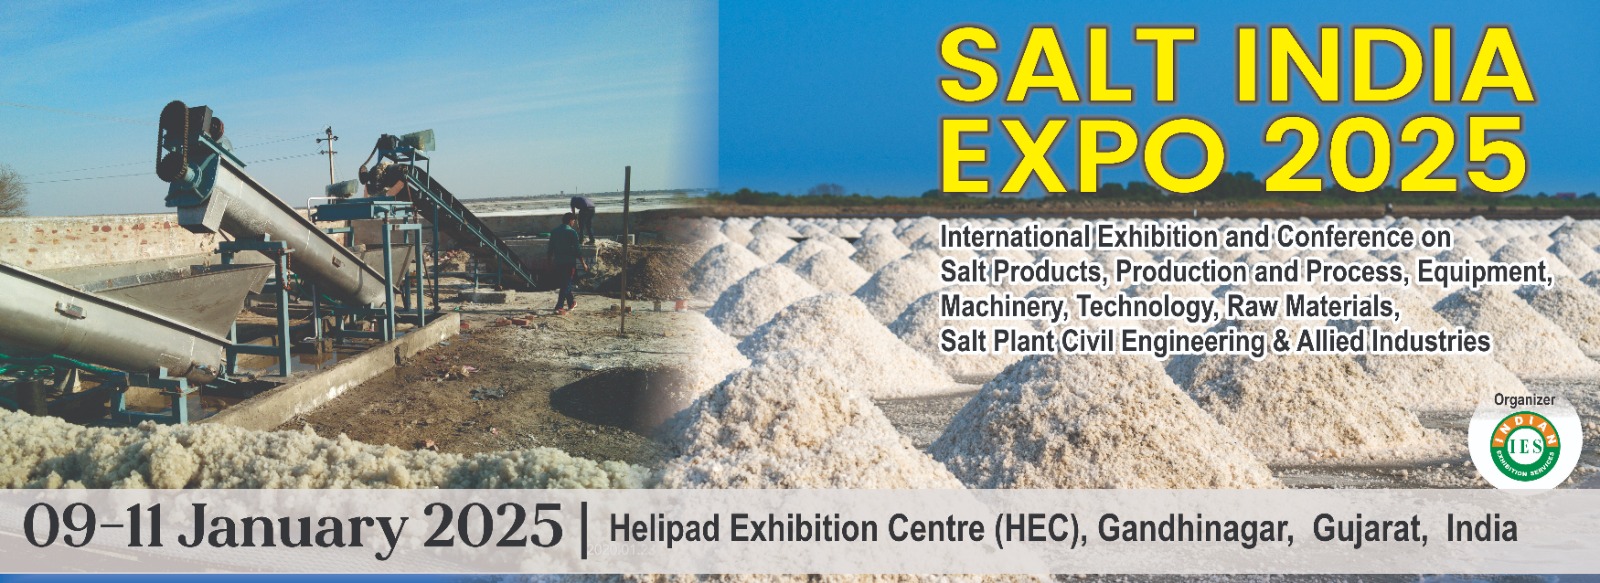 salt-india-expo